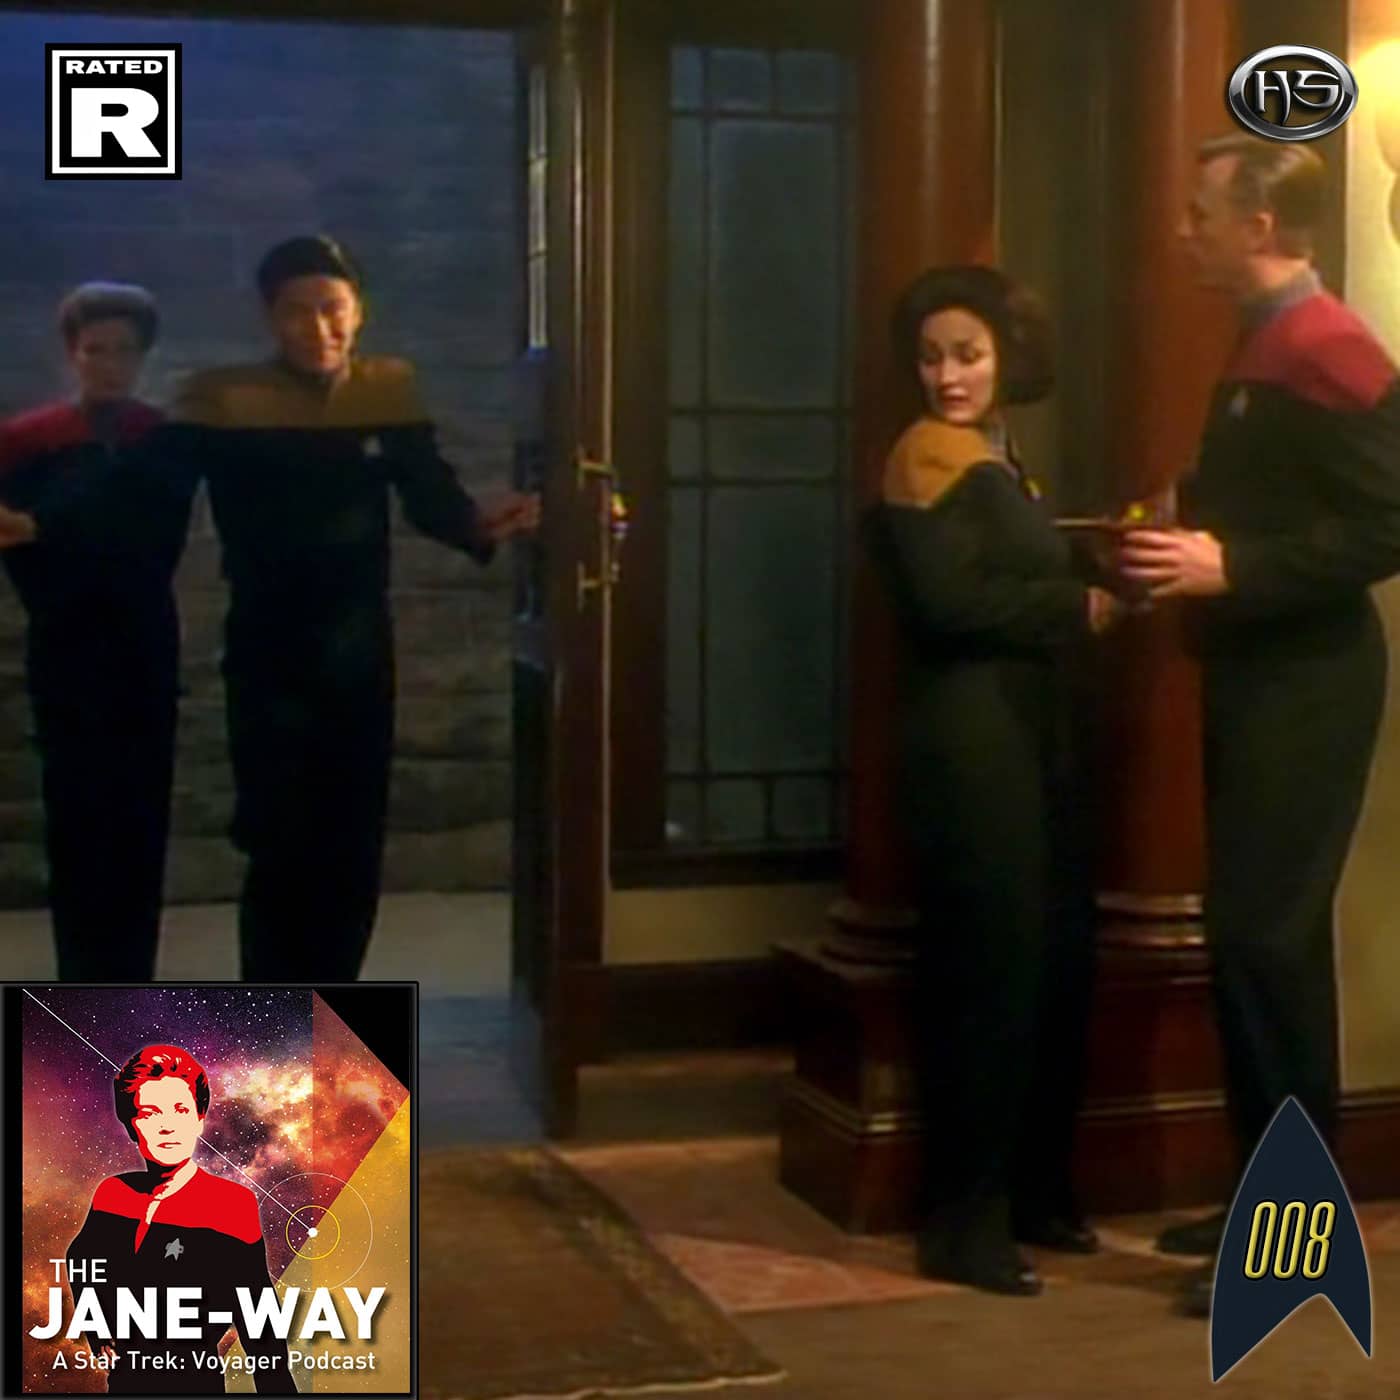 TheJane-Way Episode 8